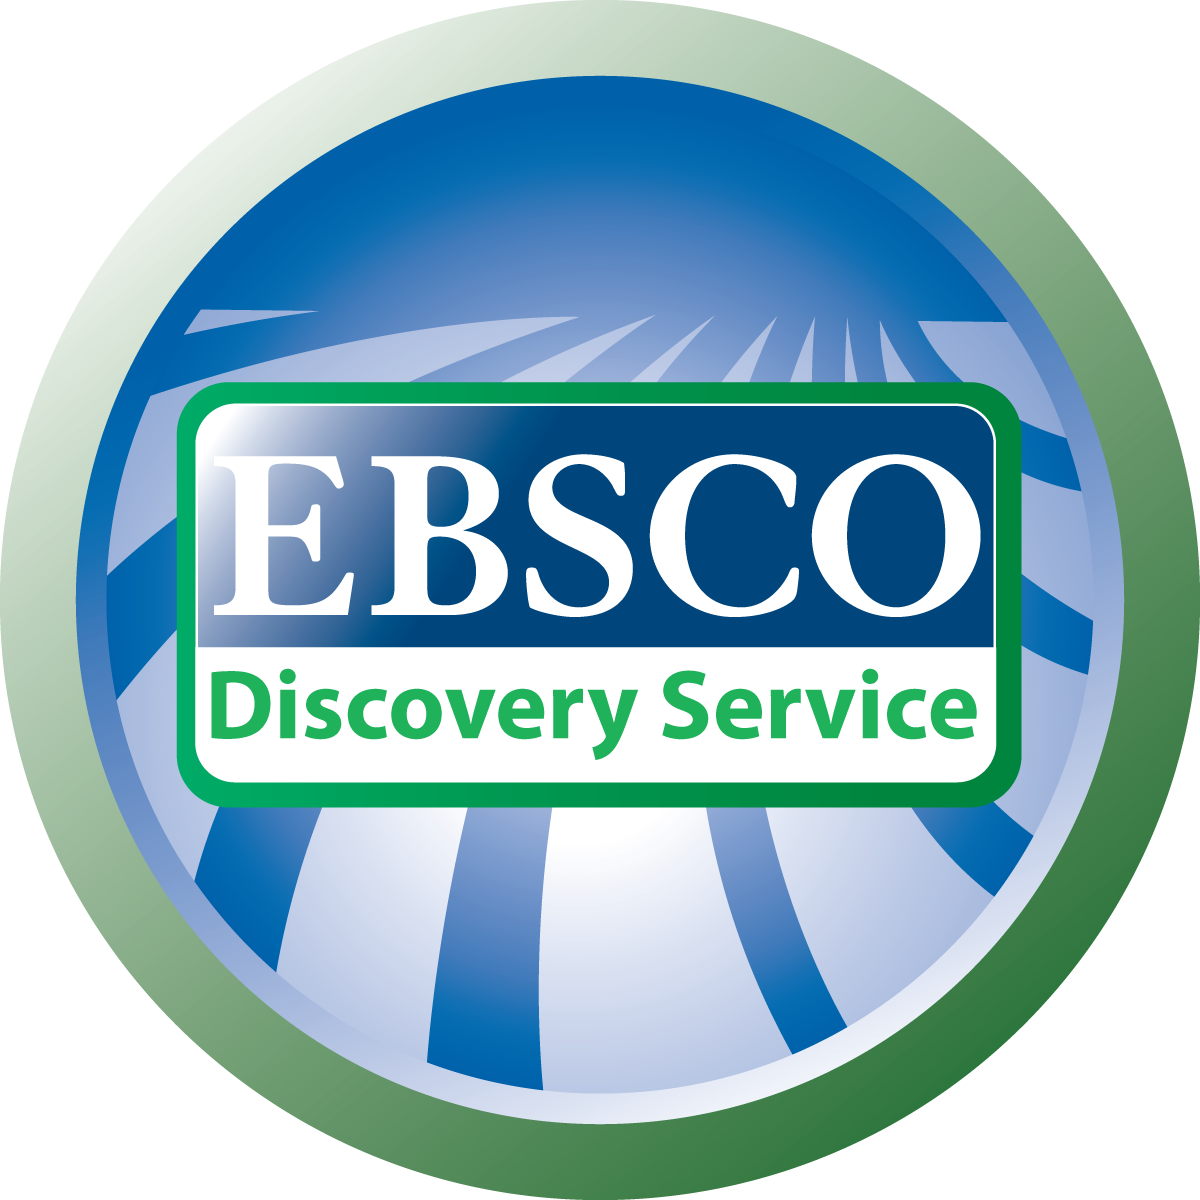 ebsco discovery service logo